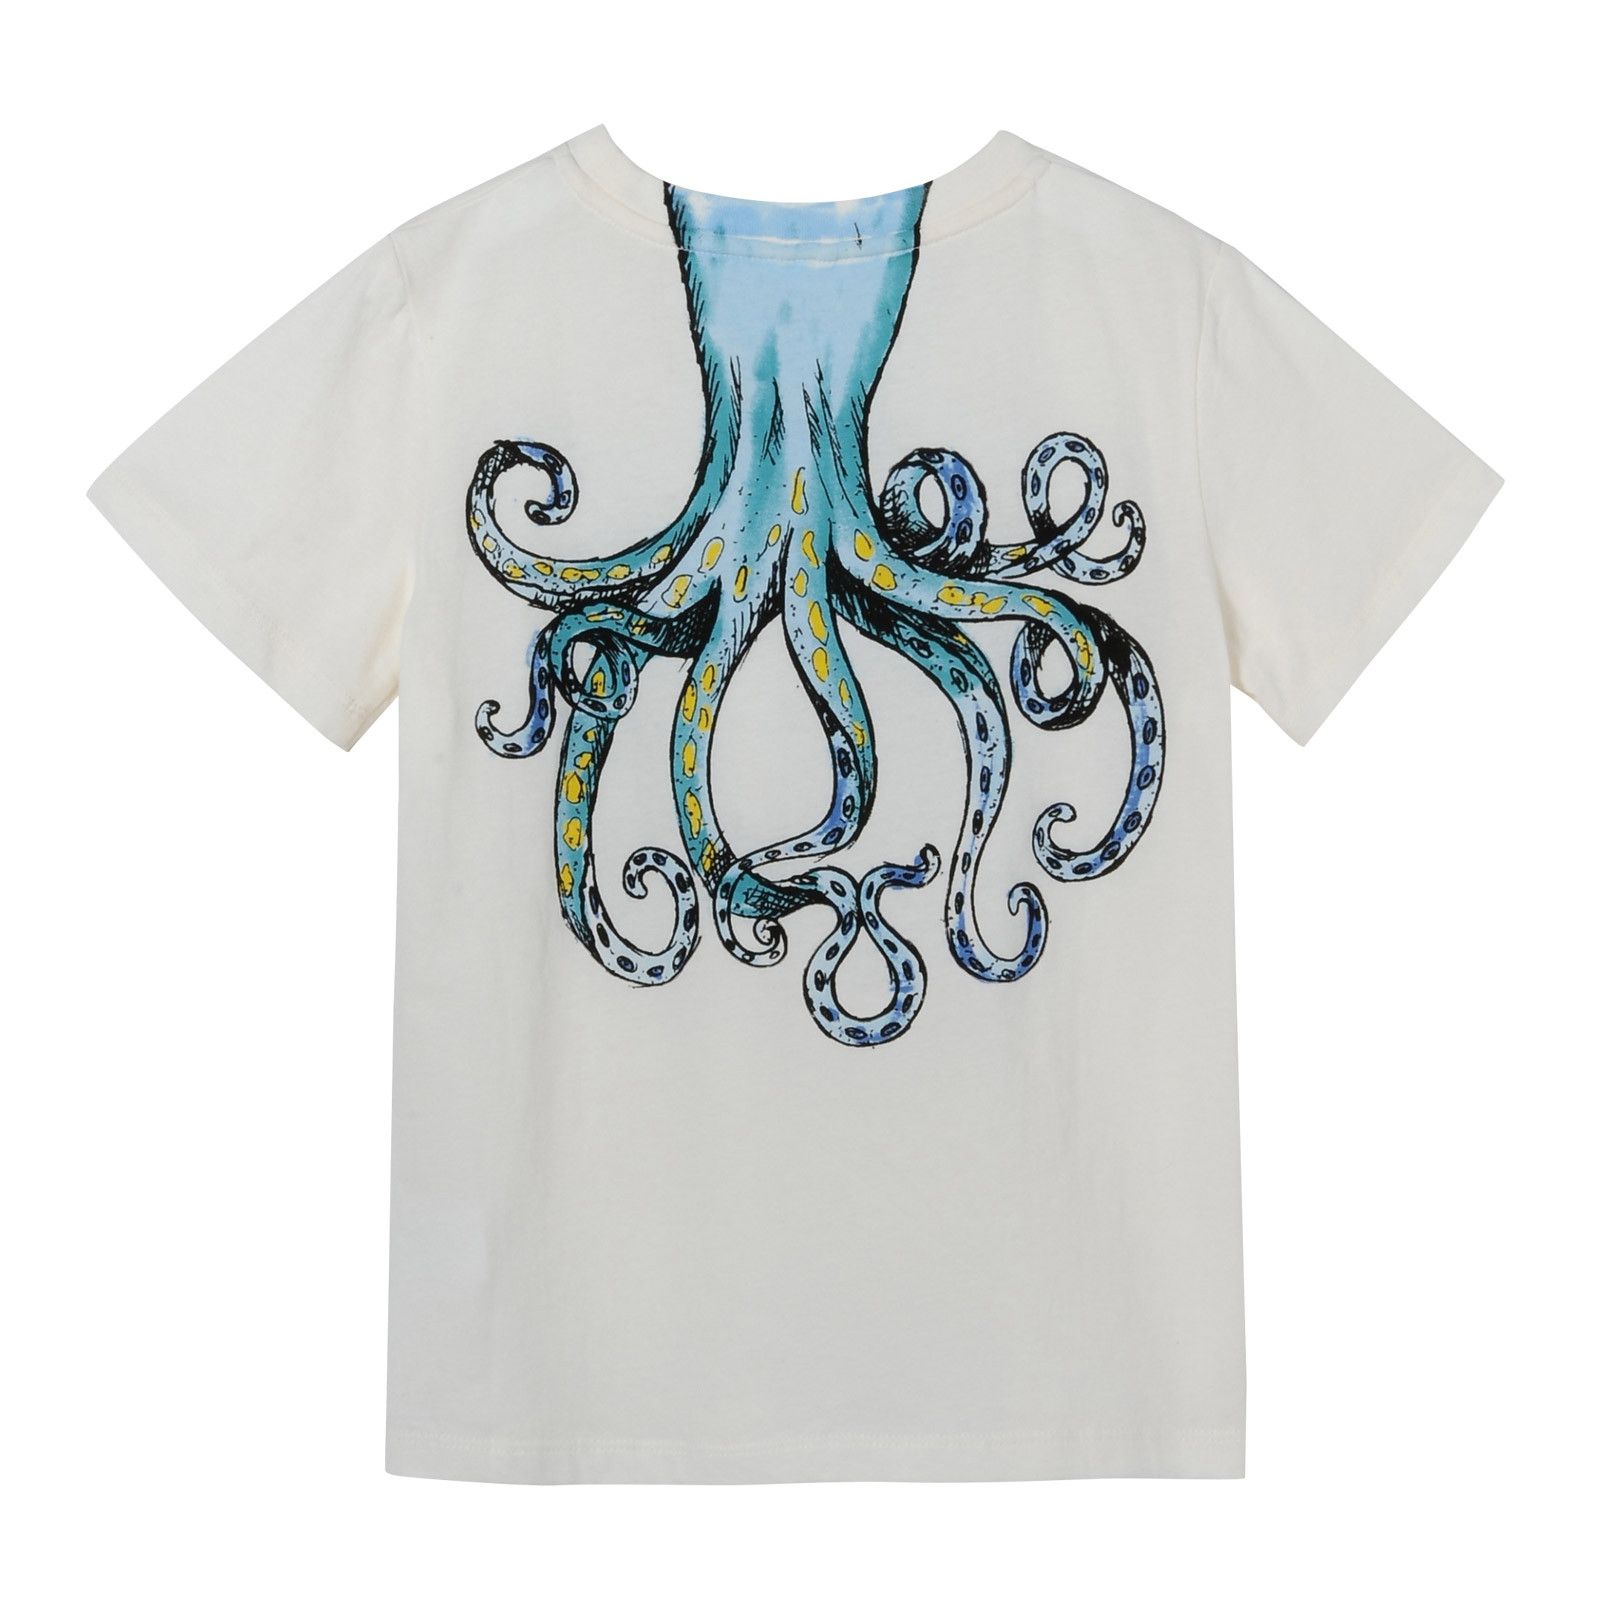 Boys White Cotton T-Shirt With Colorful Octopus Print - CÉMAROSE | Children's Fashion Store - 2